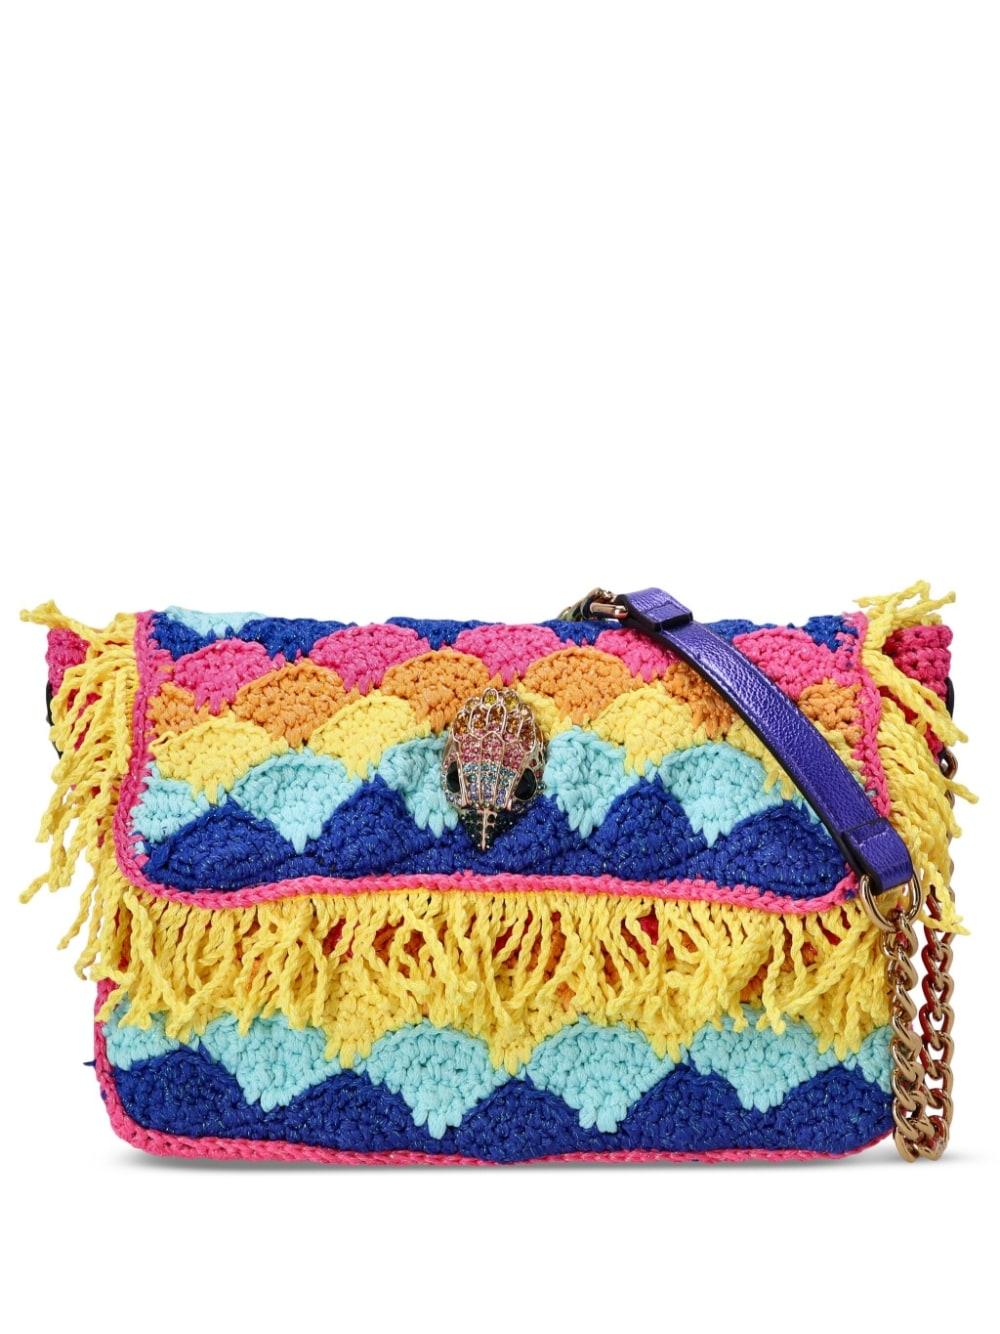 Kurt Geiger Crochet Kensington Print Shoulder Bag in Blue | Lyst